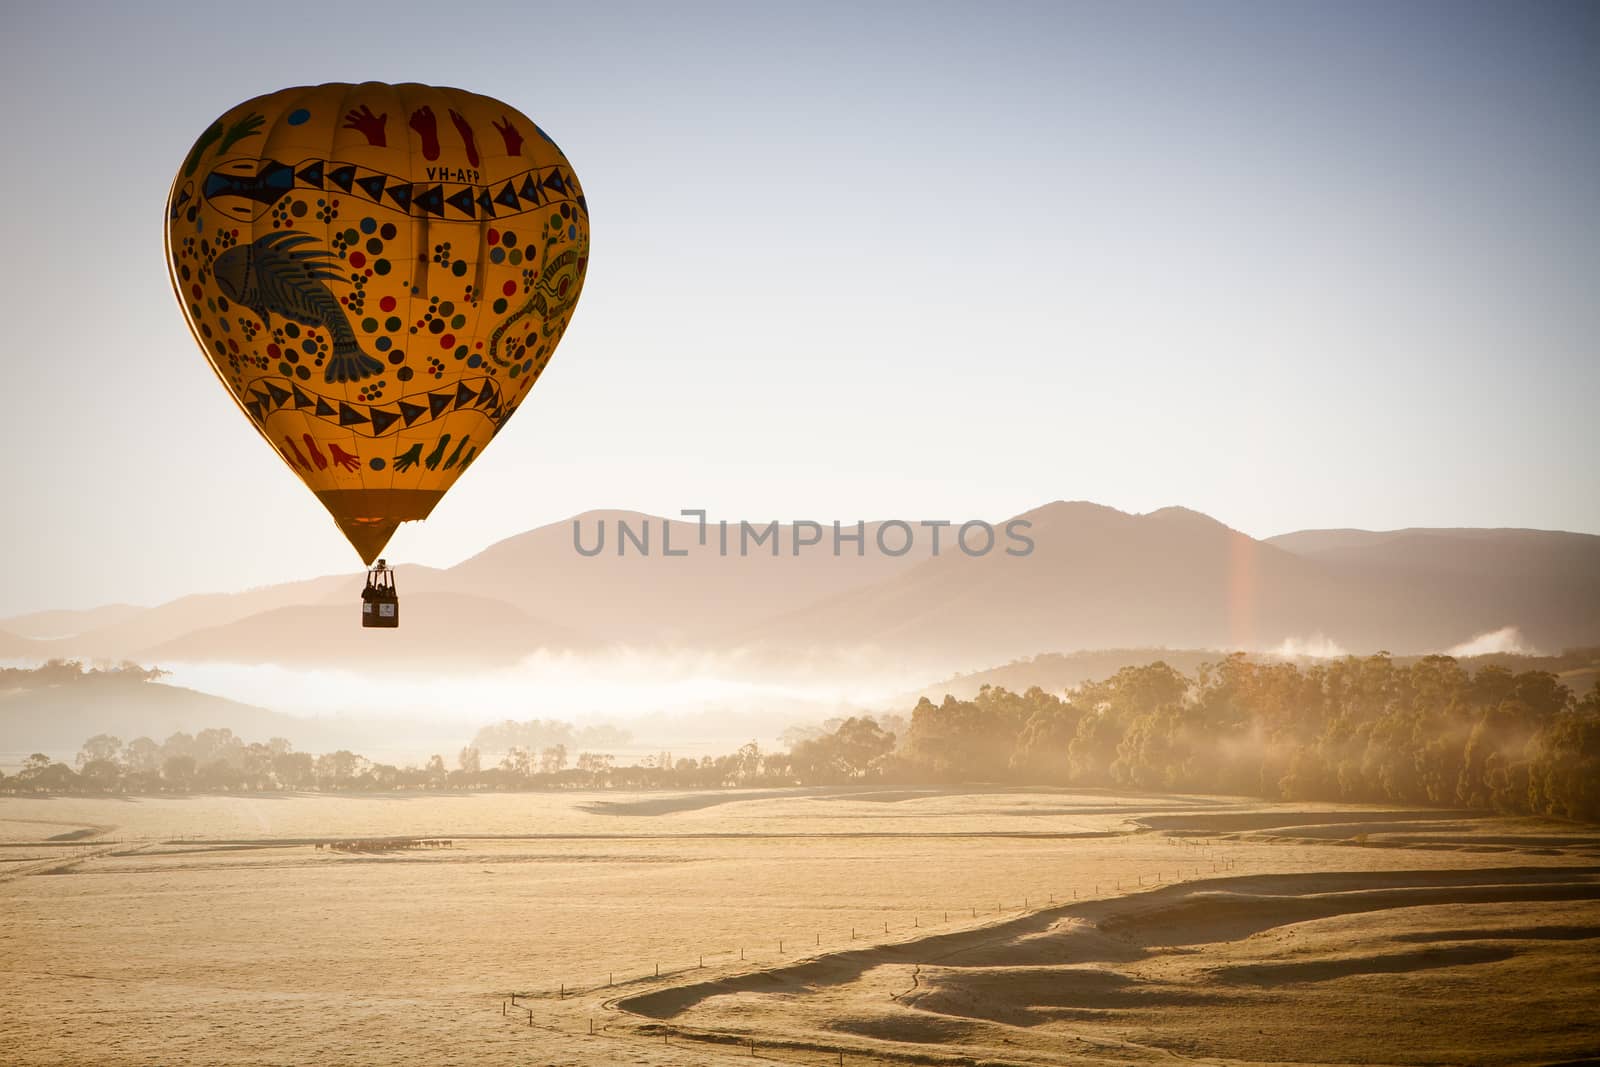 A sunrise hot air balloon flight over the Yarra Valley in Victoria, Australia